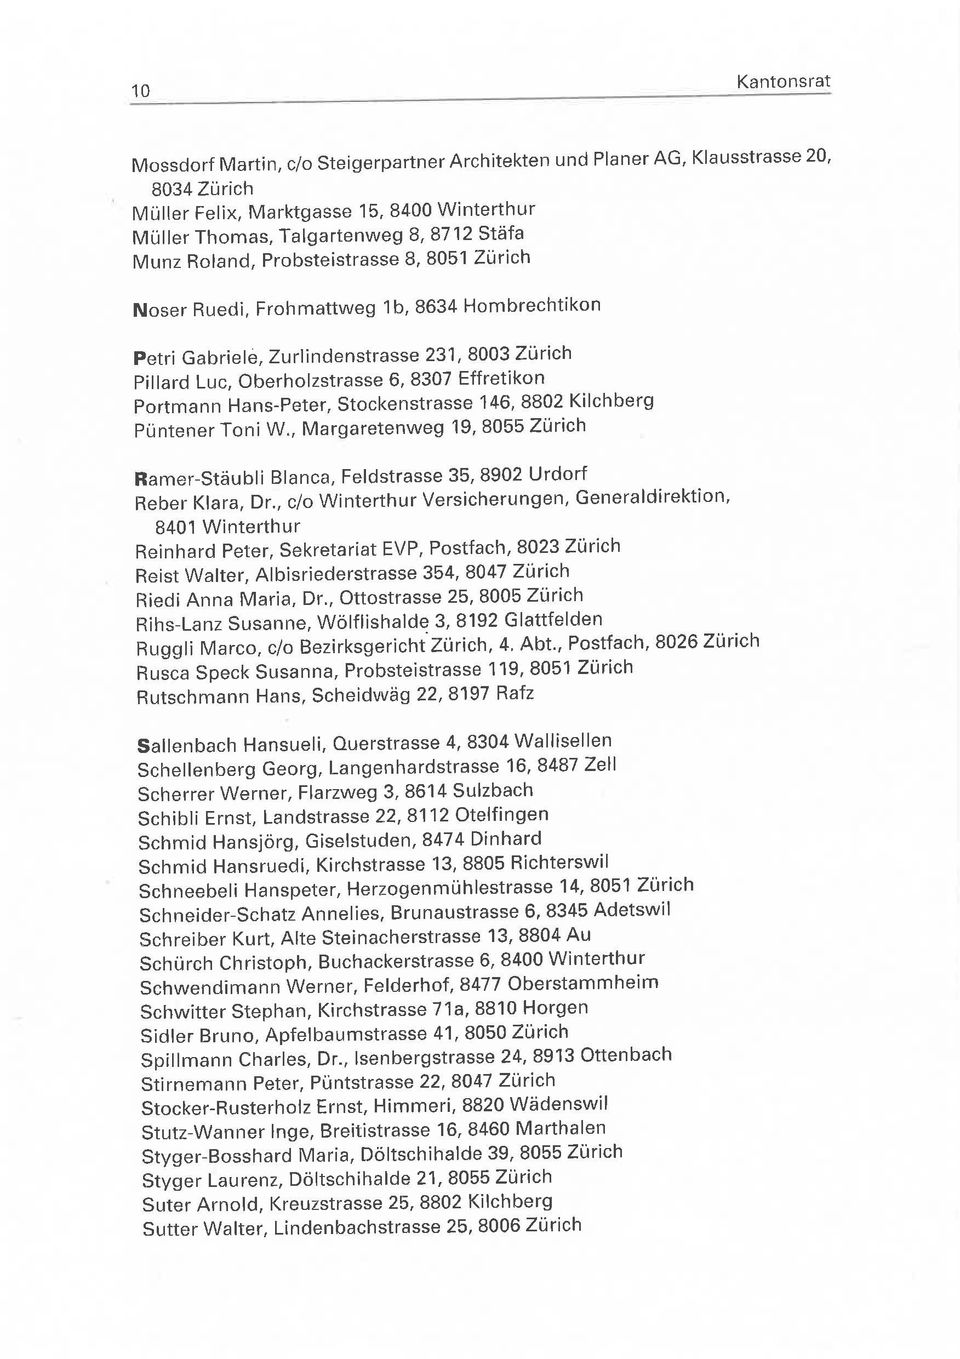 Hans-Peter, Stoekenstrasse 146, 8802 Kilchberg Püntener Toni W., Margaretenweg 19,8055 Zürich Ramer-Stäubli Blanca, Feldstrasse 35, 8902 Urdorf Reber Klara, Dr.